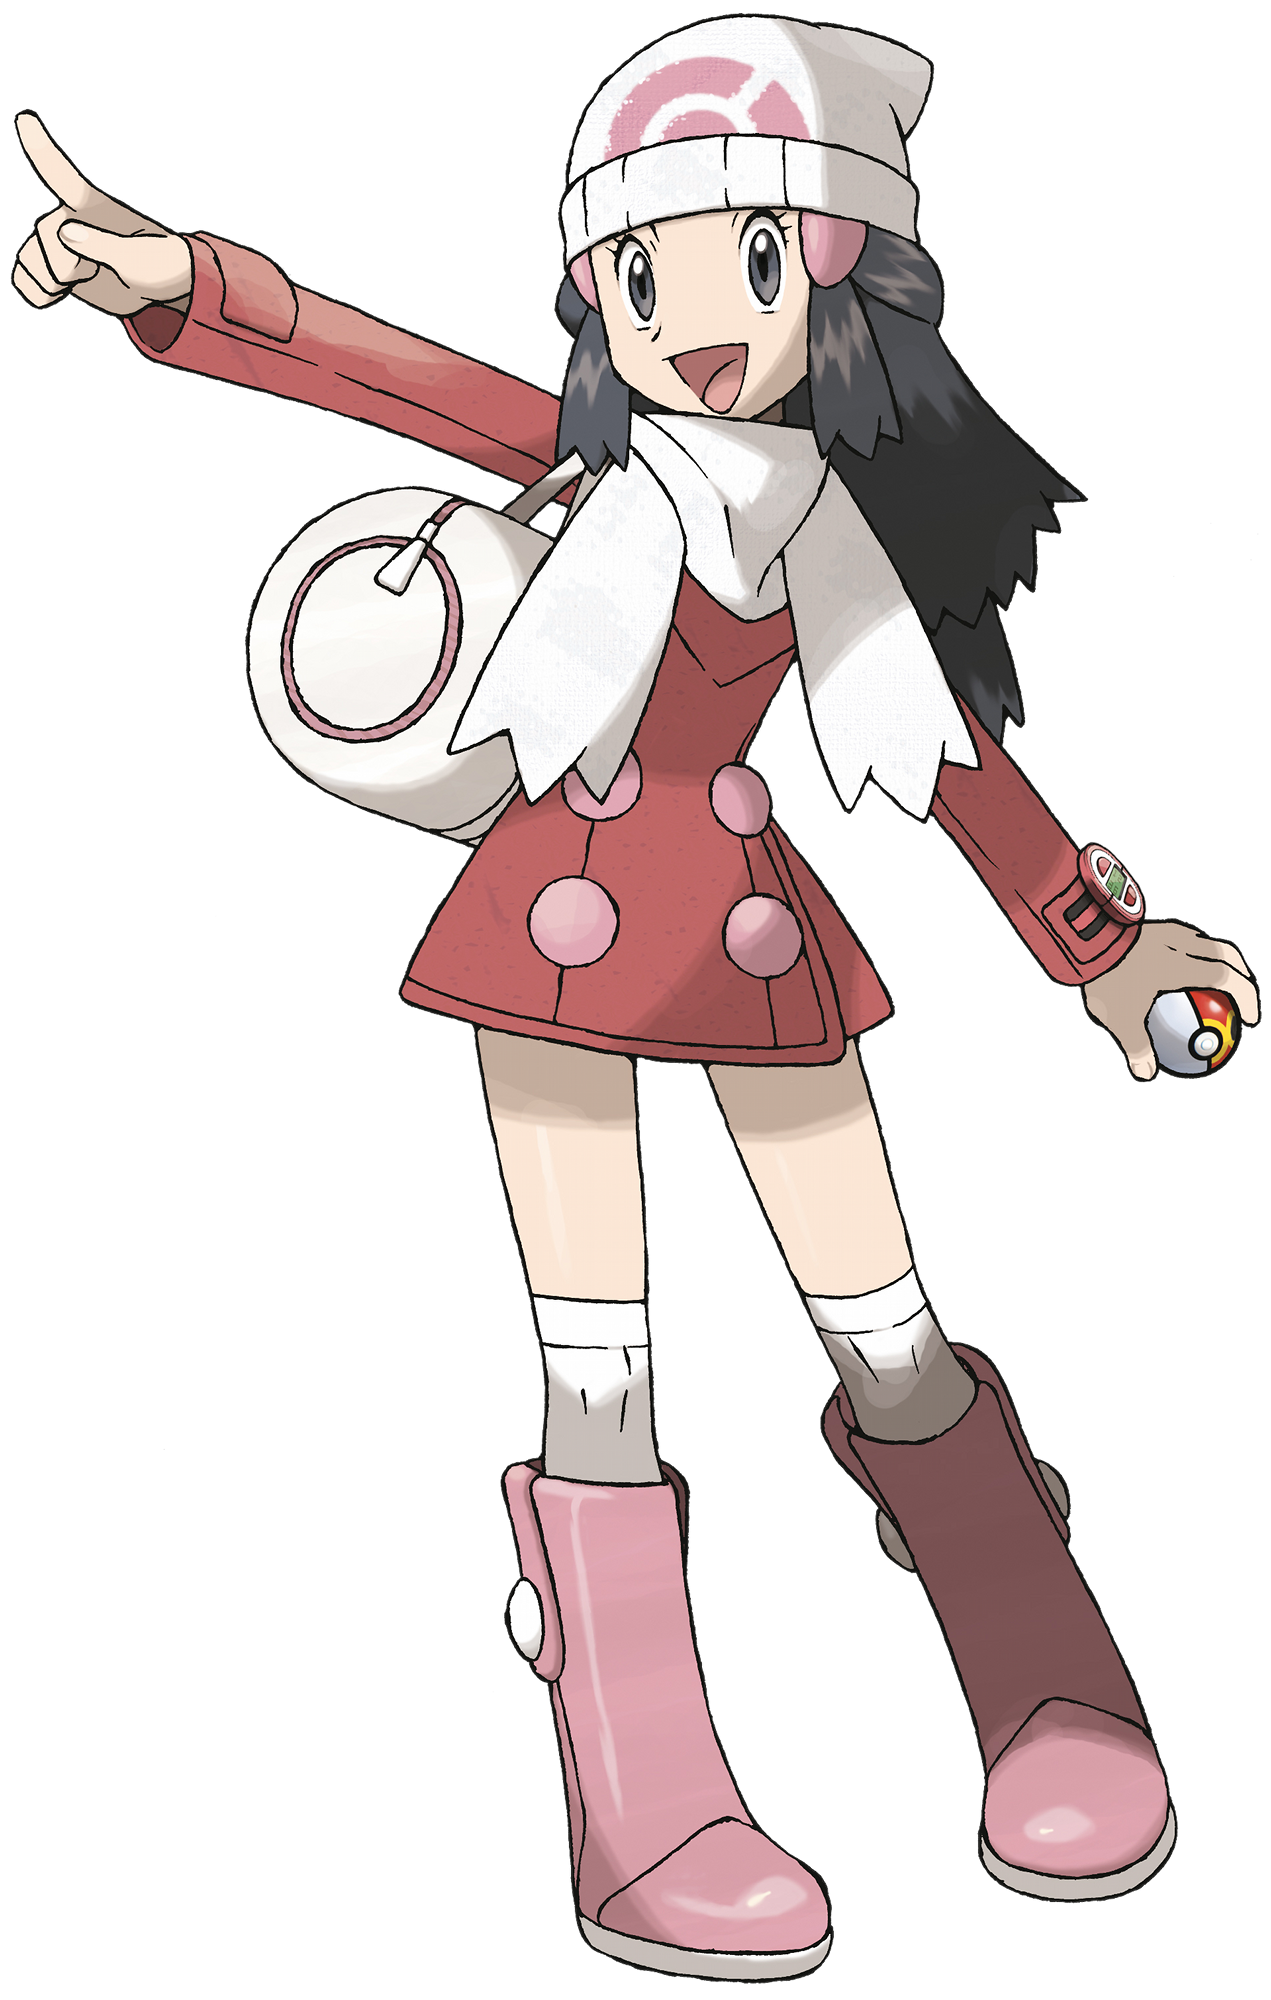 Ann - Bulbapedia, the community-driven Pokémon encyclopedia